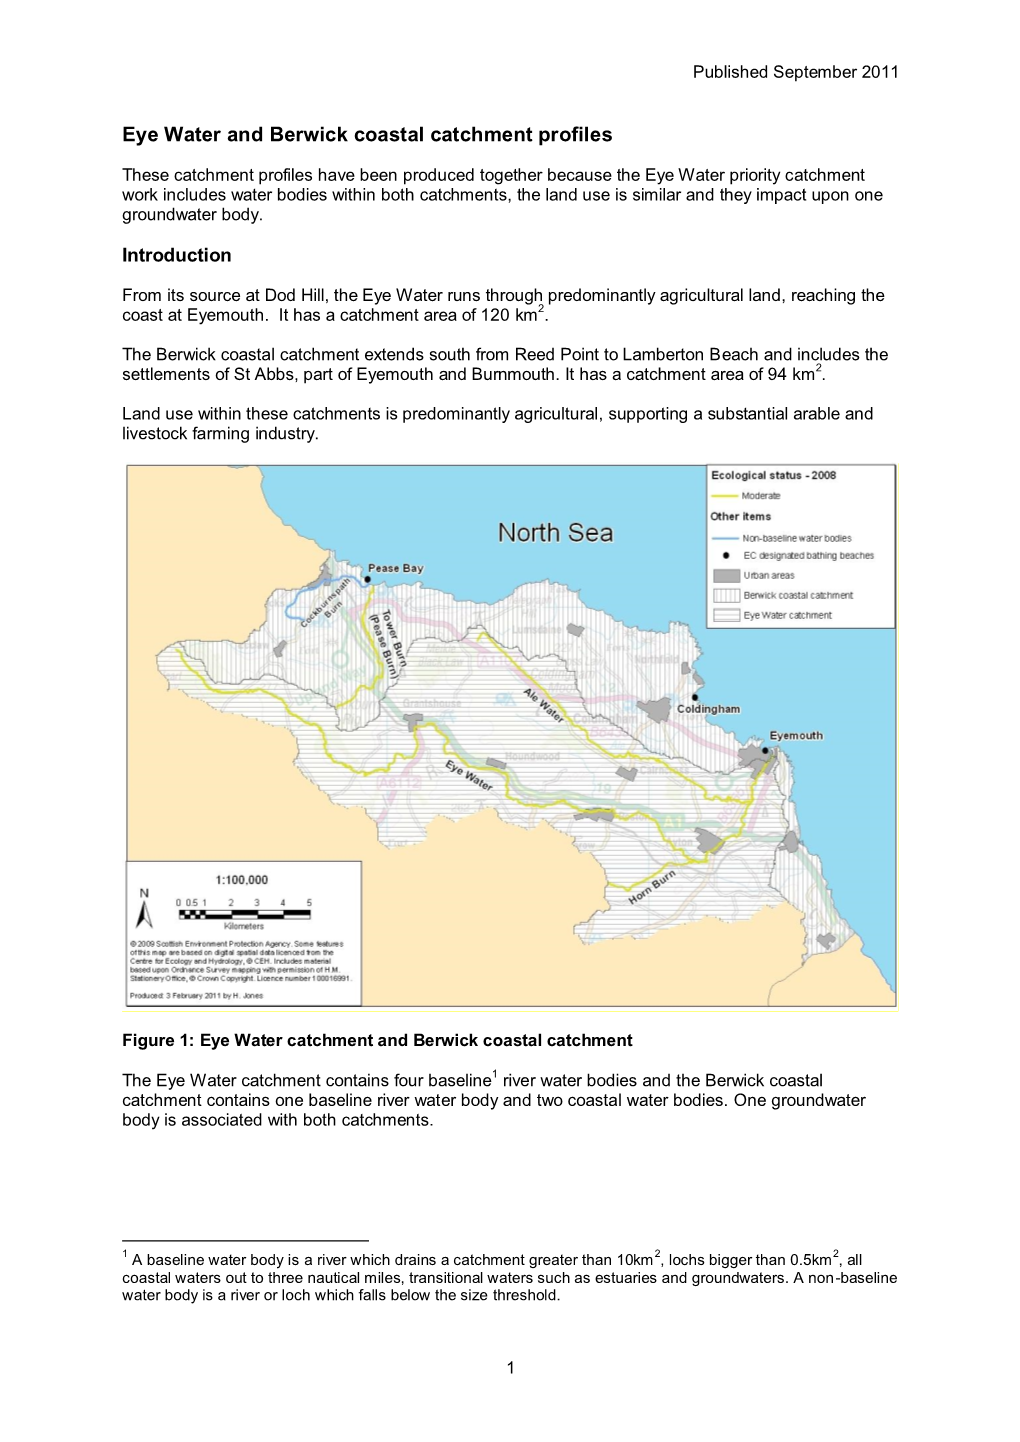 Eye Water and Berwick Coastal Catchment Profiles